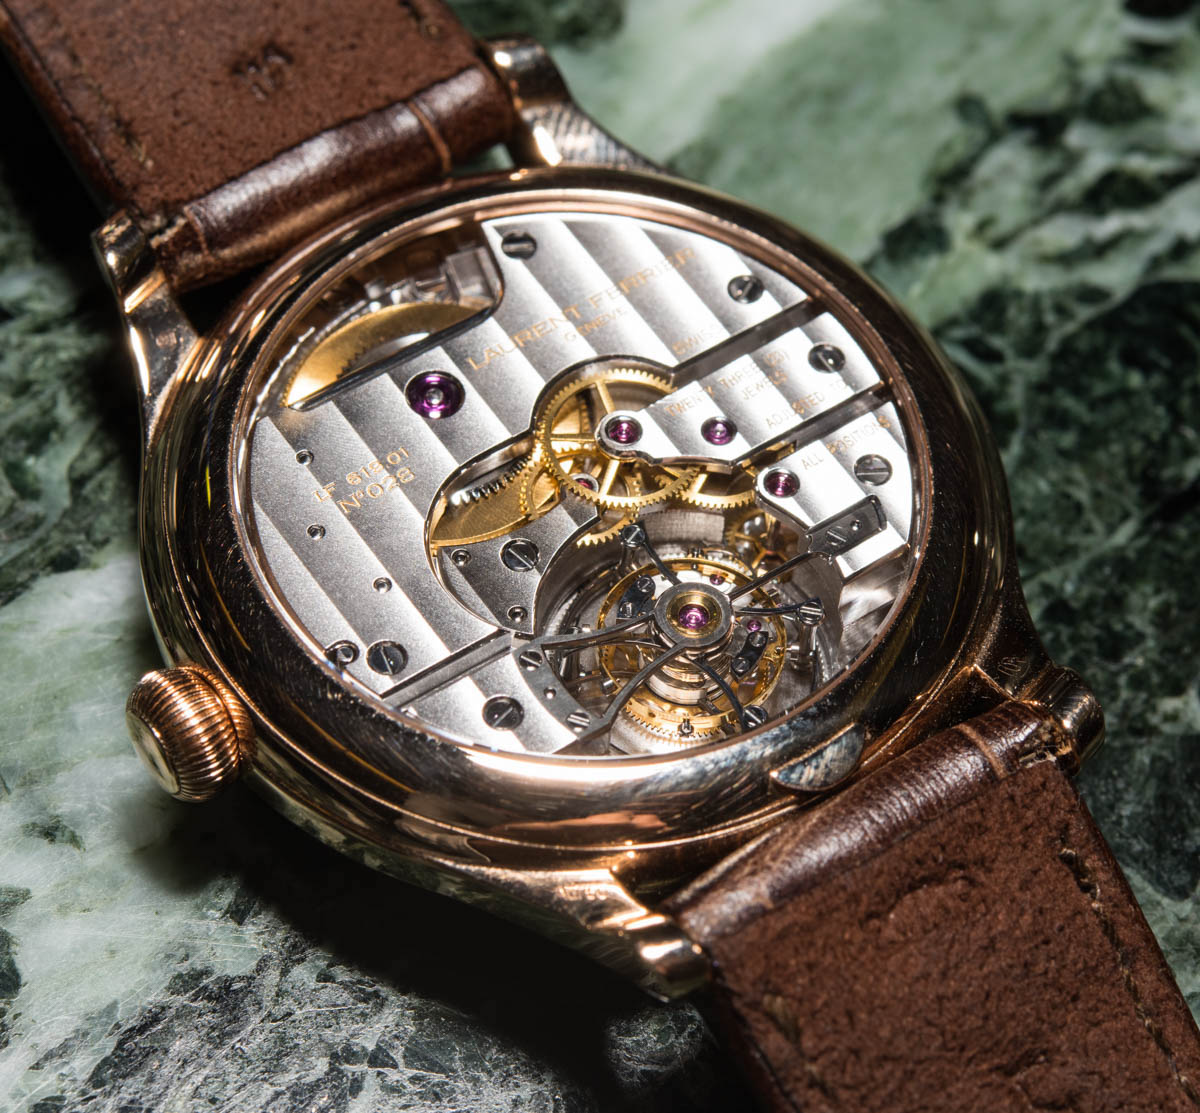 Laurent Ferrier Galet Classic Tourbillon Double Spiral Watch Review Wrist Time Reviews 